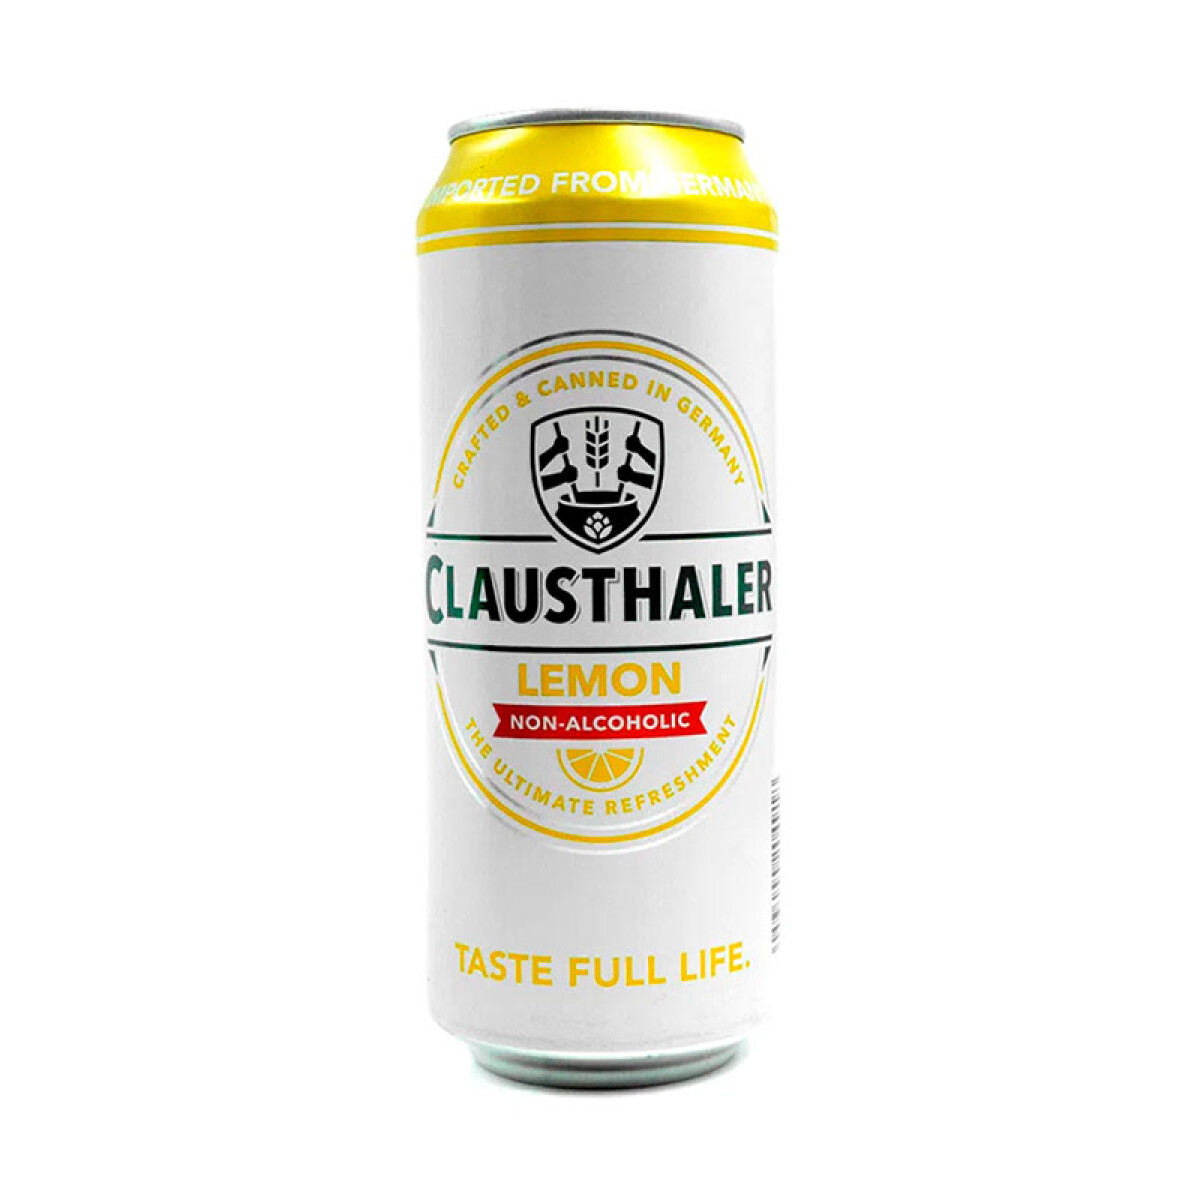 Cerveza CLAUSTHALER Lemon Lata 500ml 